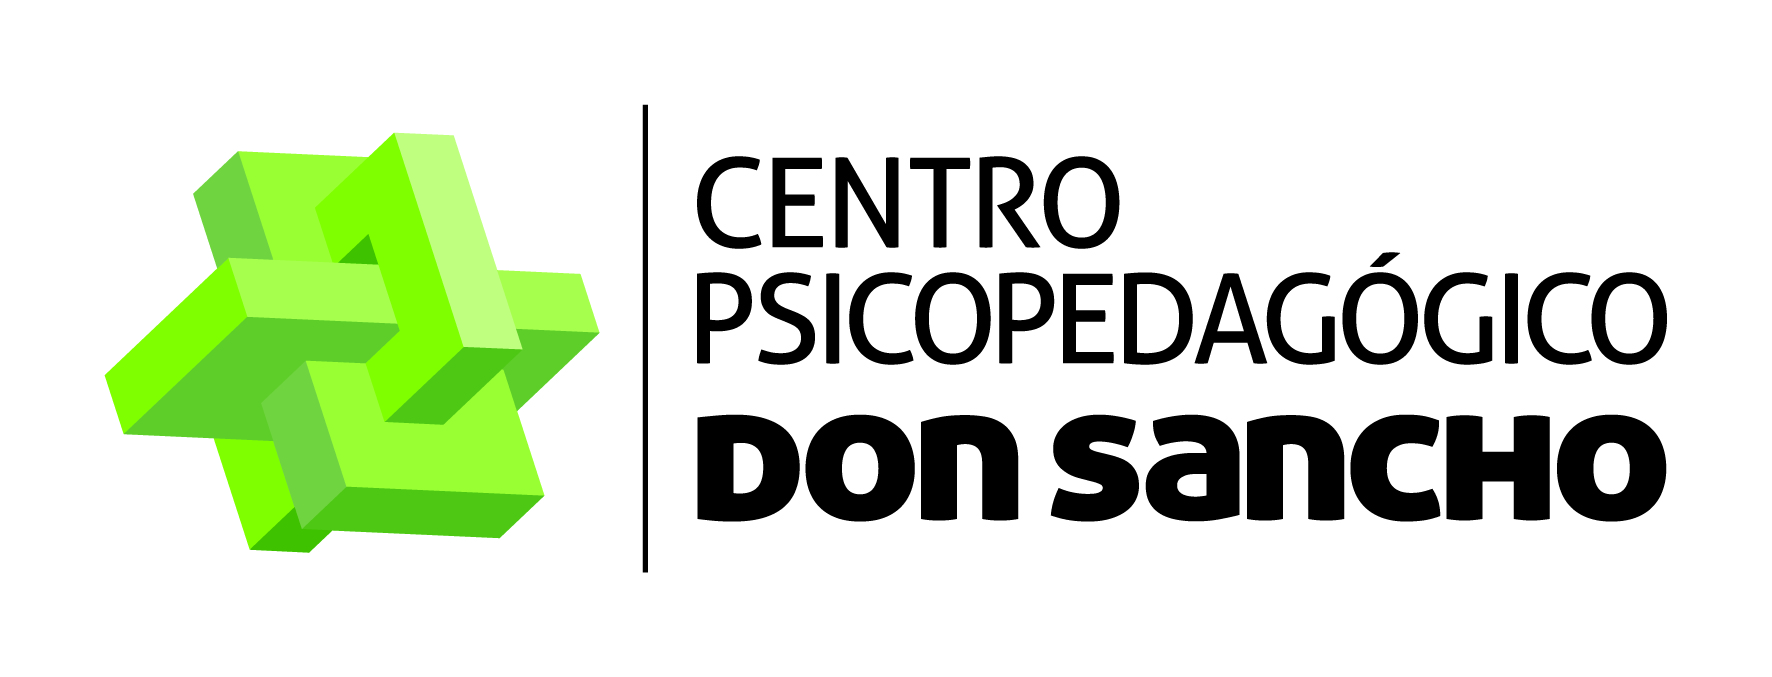 Logotipo de la clínica CENTRO PSICOPEDAGOGICO DON SANCHO